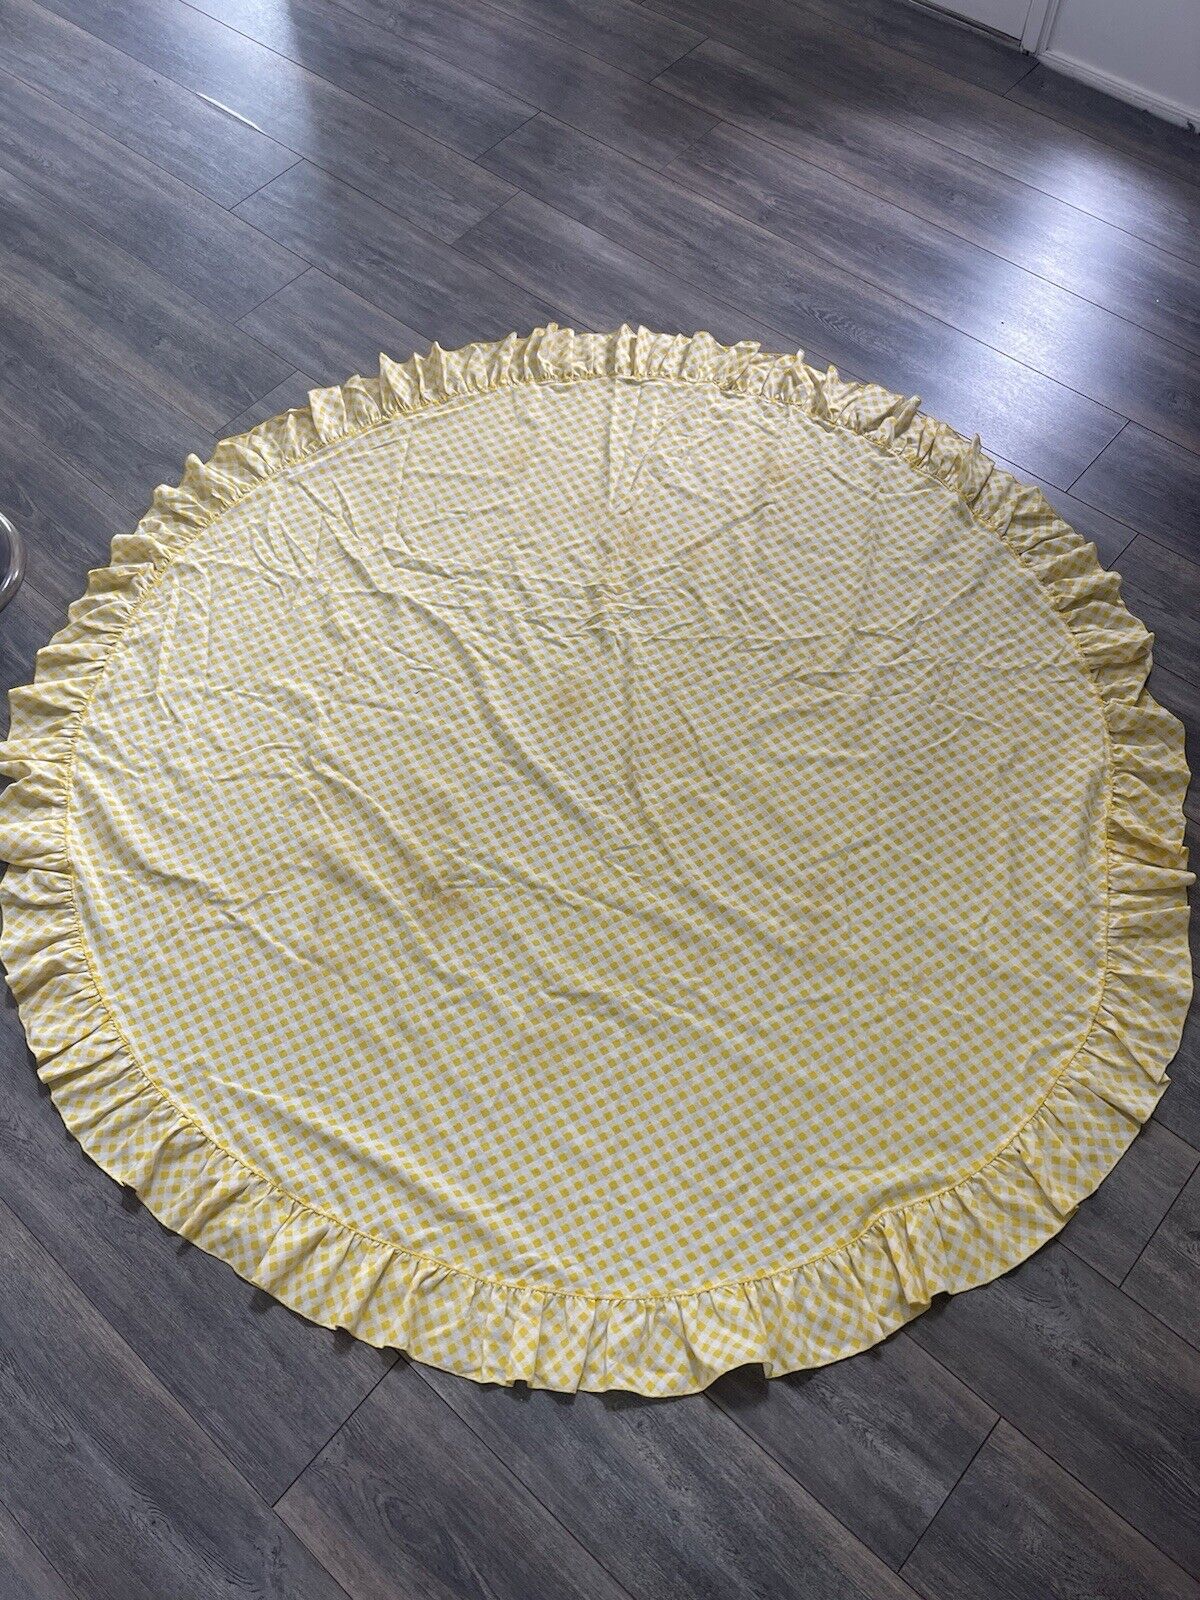 Vintage Tanlecloth Checkered Yellow White Round Circle Ruffle Cotton Picnic 67”